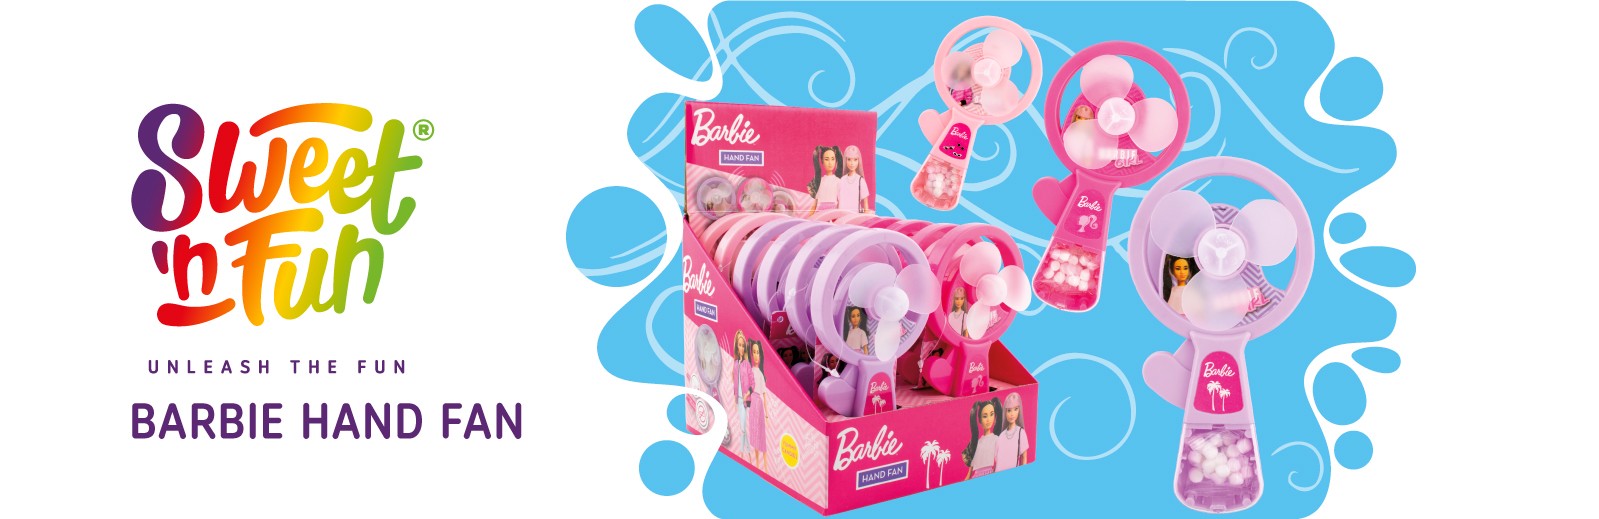 Barbie_banner